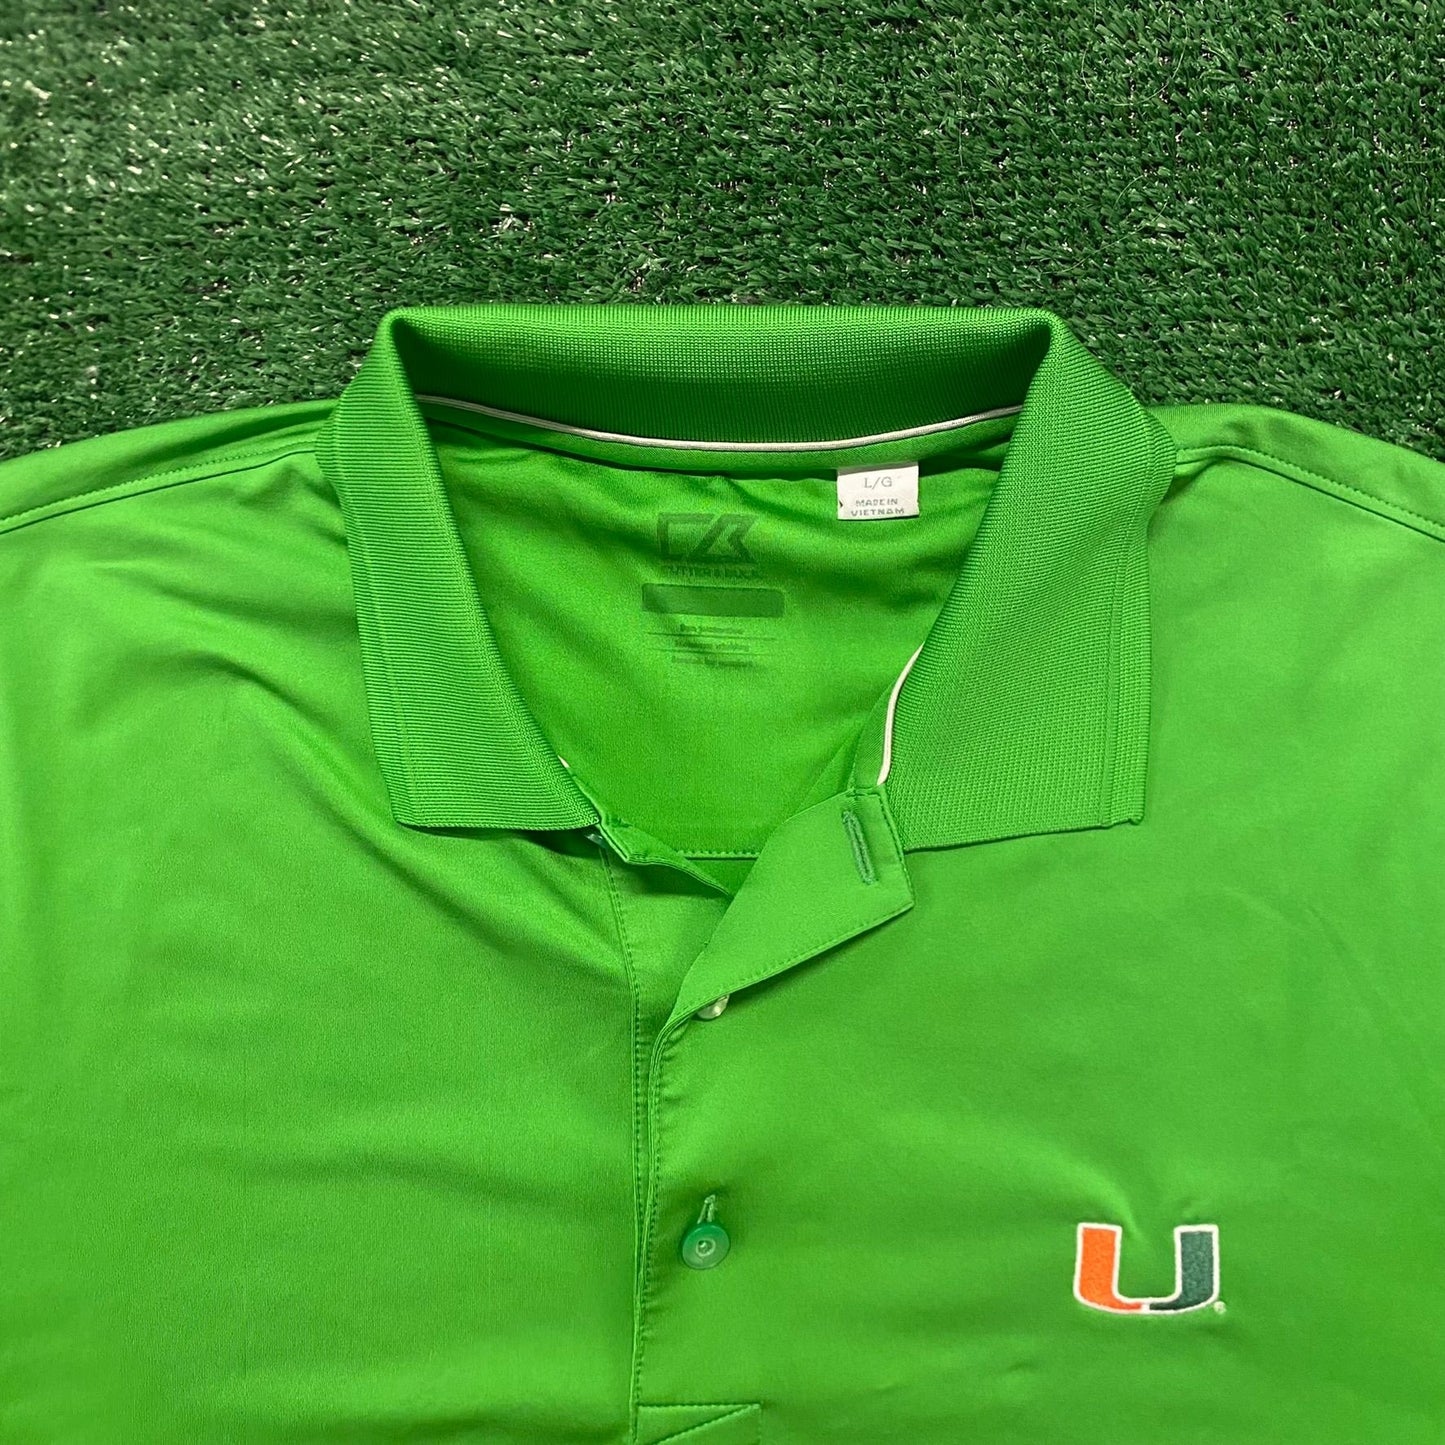 Miami Hurricanes College Sports Performance Polo Shirt